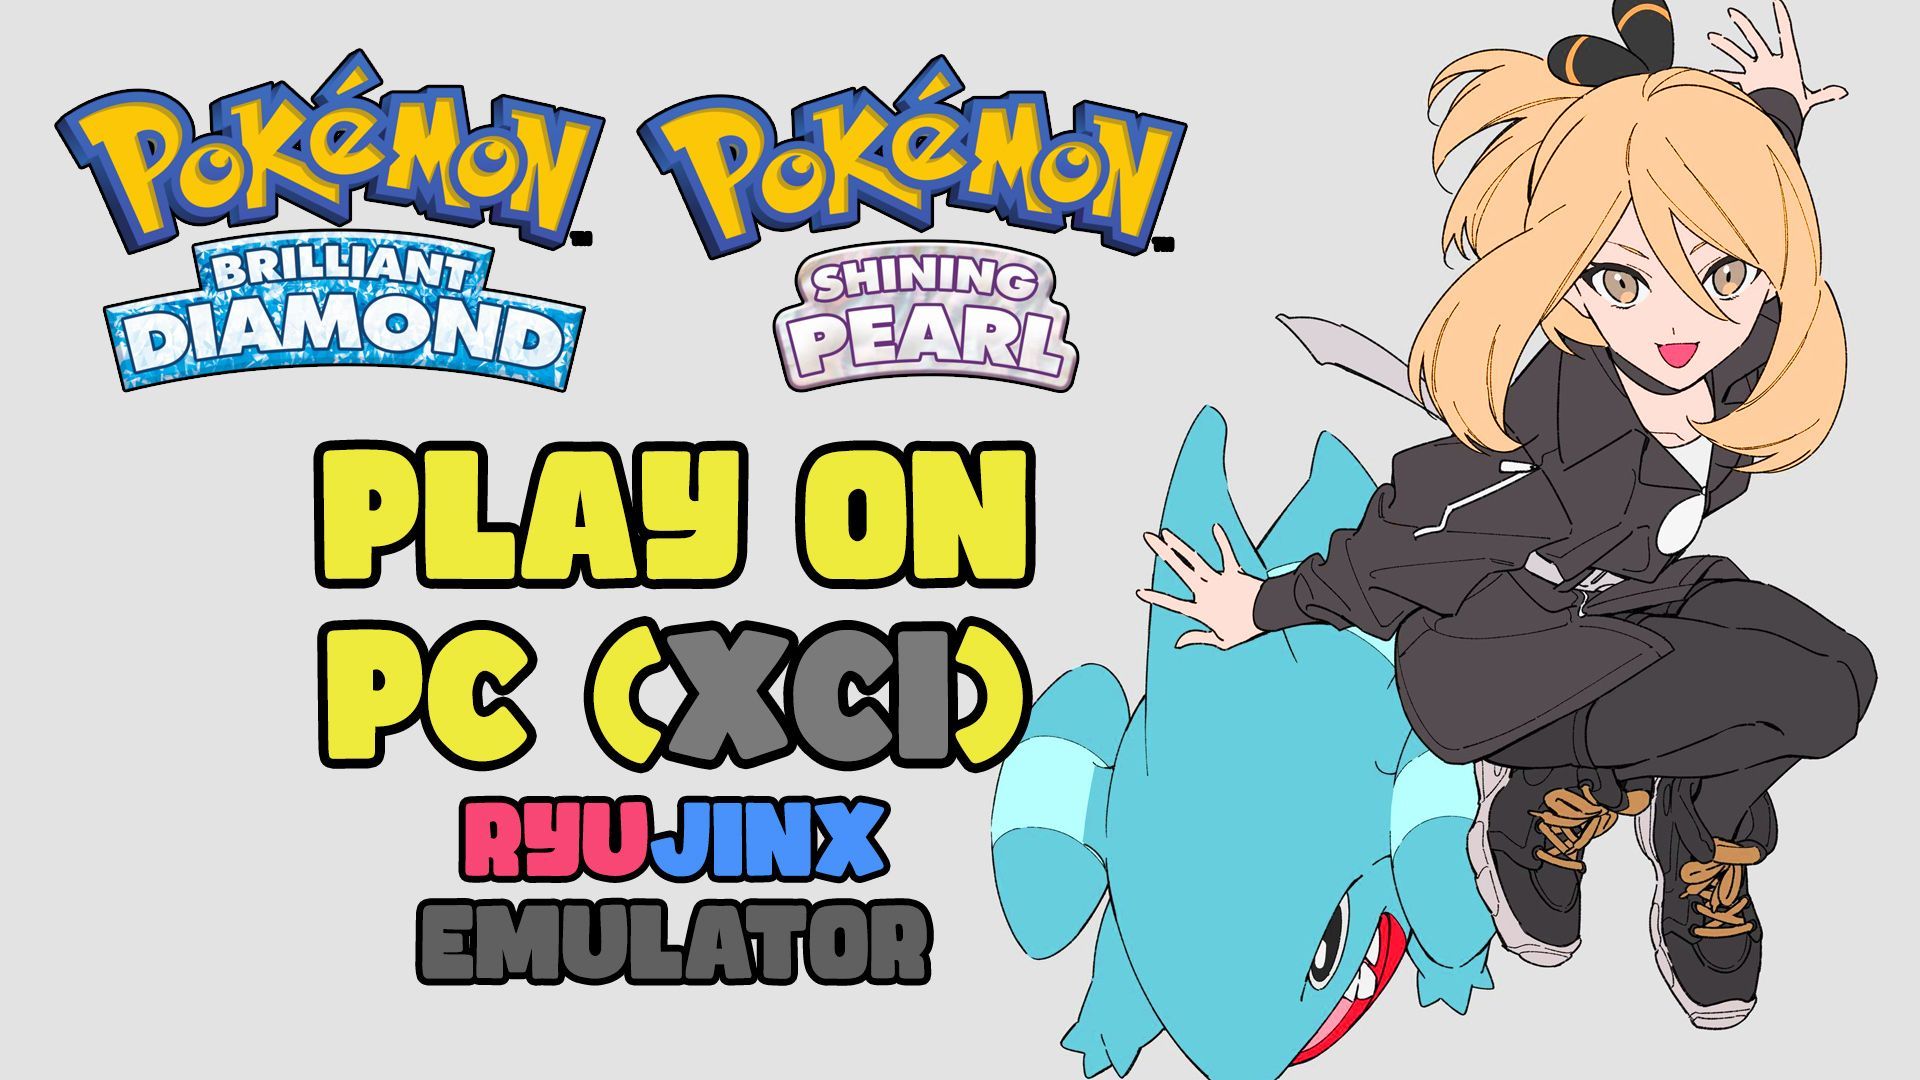 Pokémon Brilliant Diamond XCI NSP Full Game Download - BiliBili